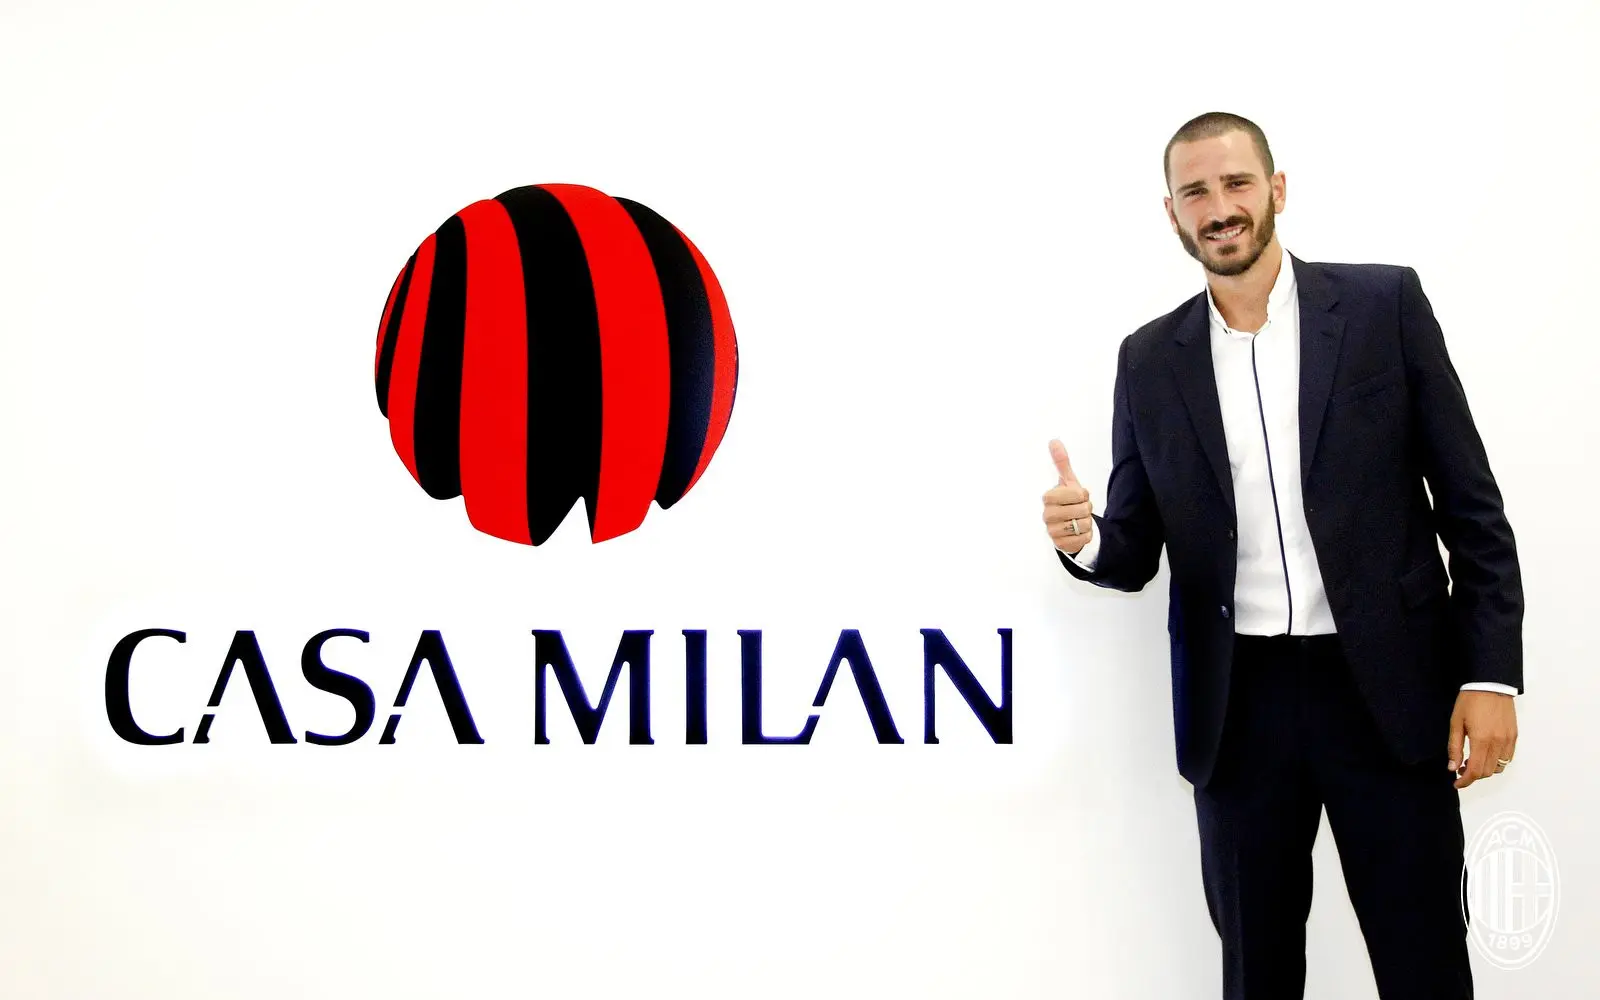 Bek AC Milan Leonardo Bonucci (acmilan.com)